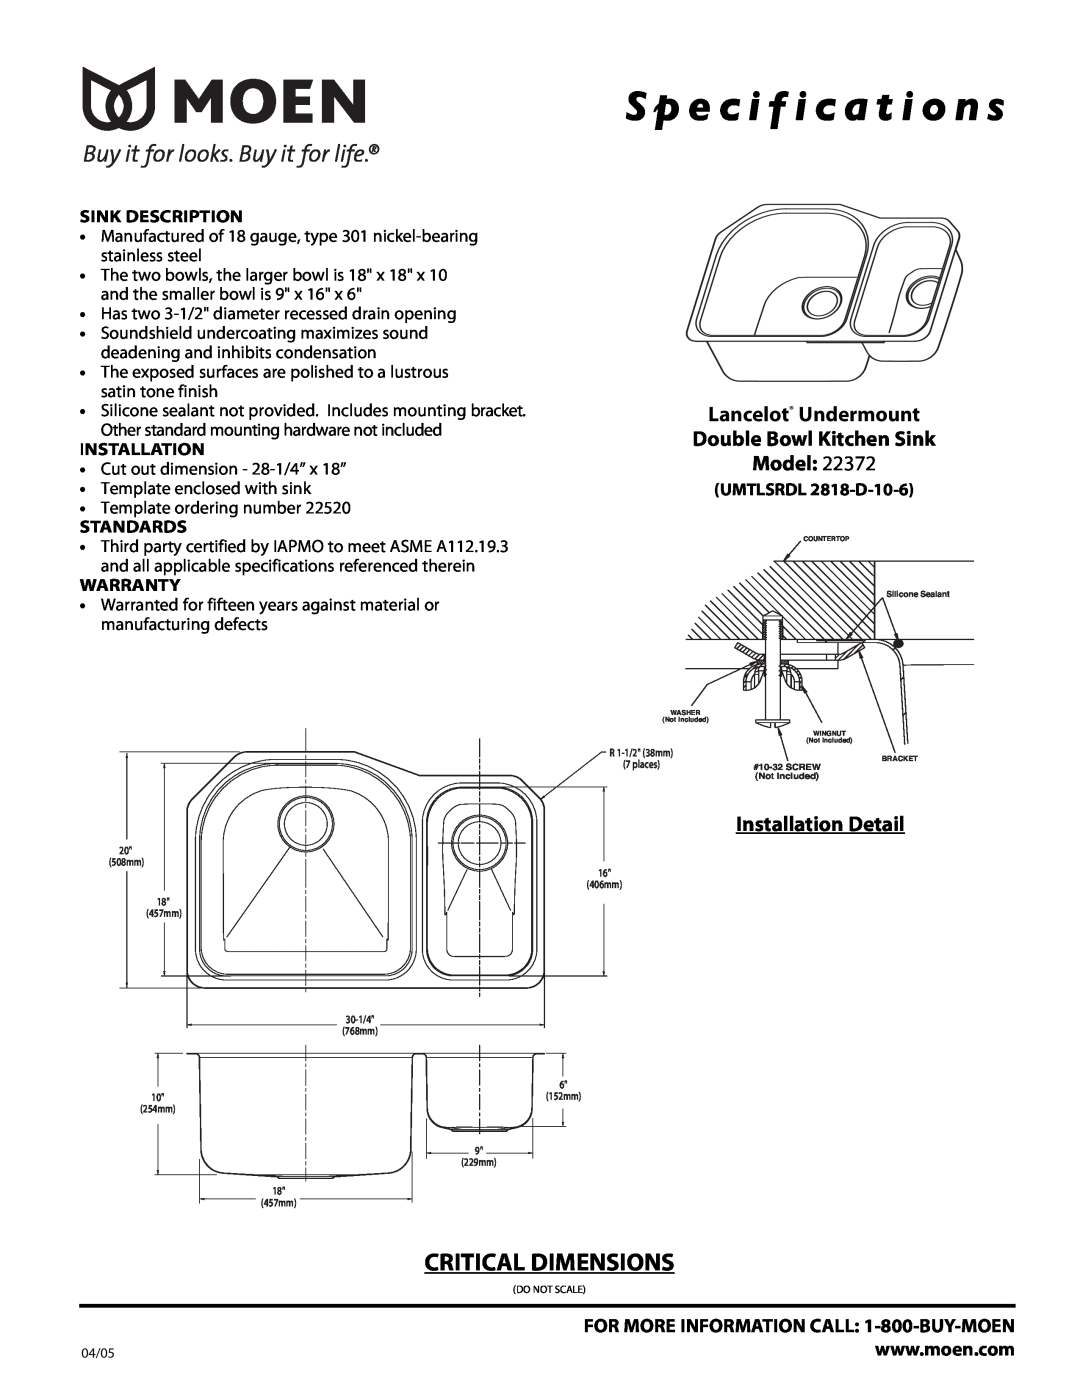 Moen 22372 specifications S p e c i f i c a t i o n s, Critical Dimensions, Installation Detail, Sink Description 